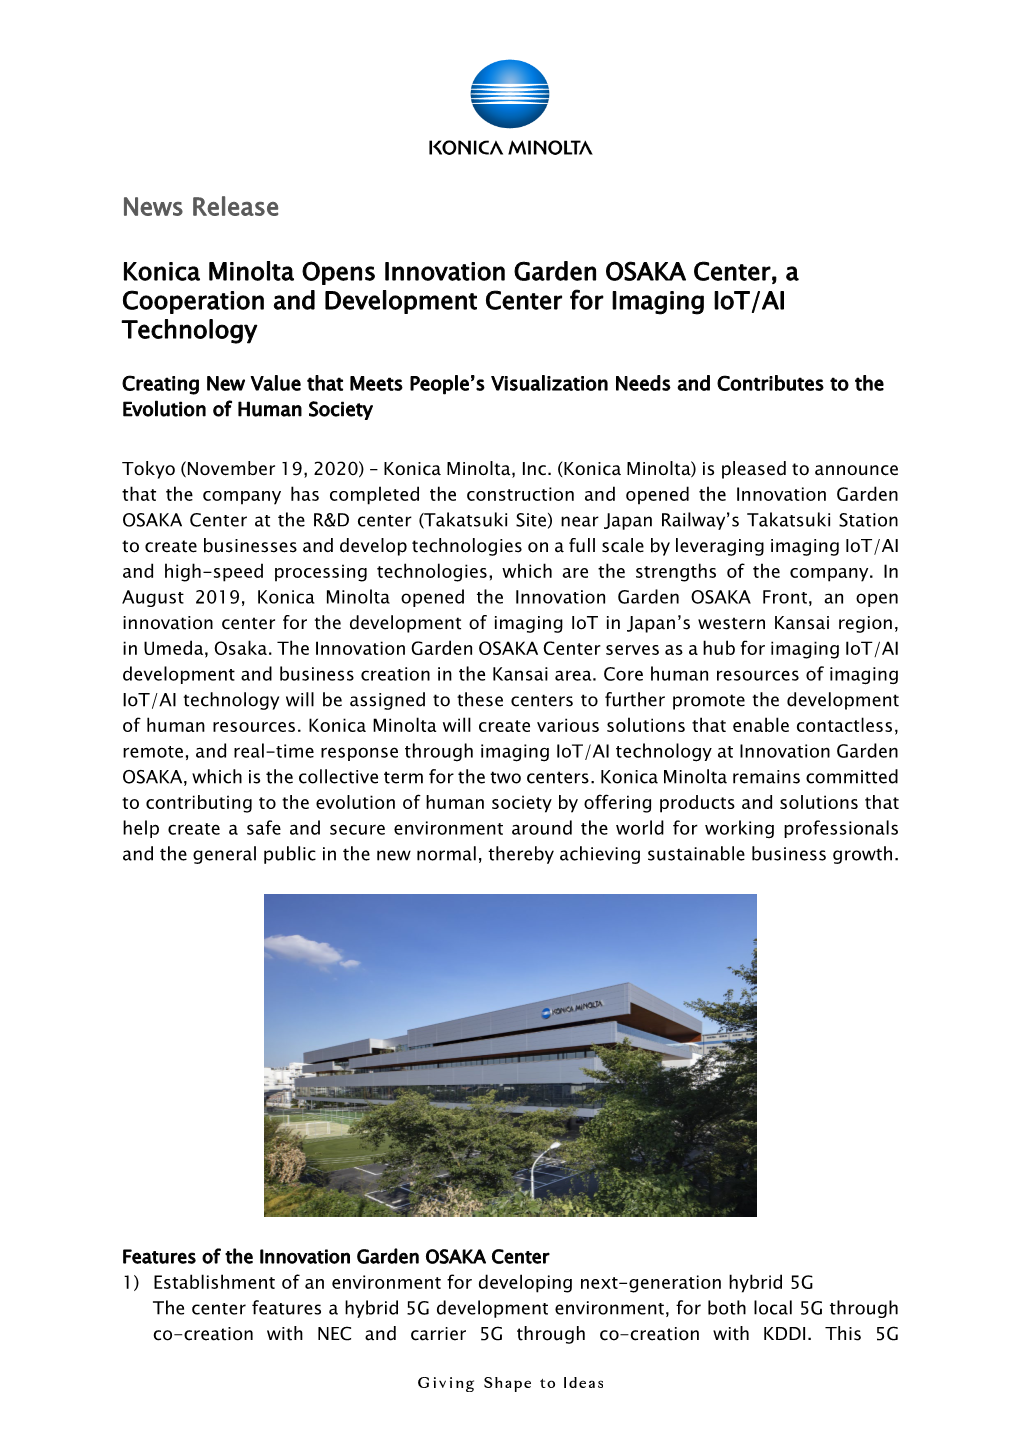 Konica Minolta Opens Innovation Garden OSAKA Center, a Cooperation and Development Center for Imaging Iot/AI Technology